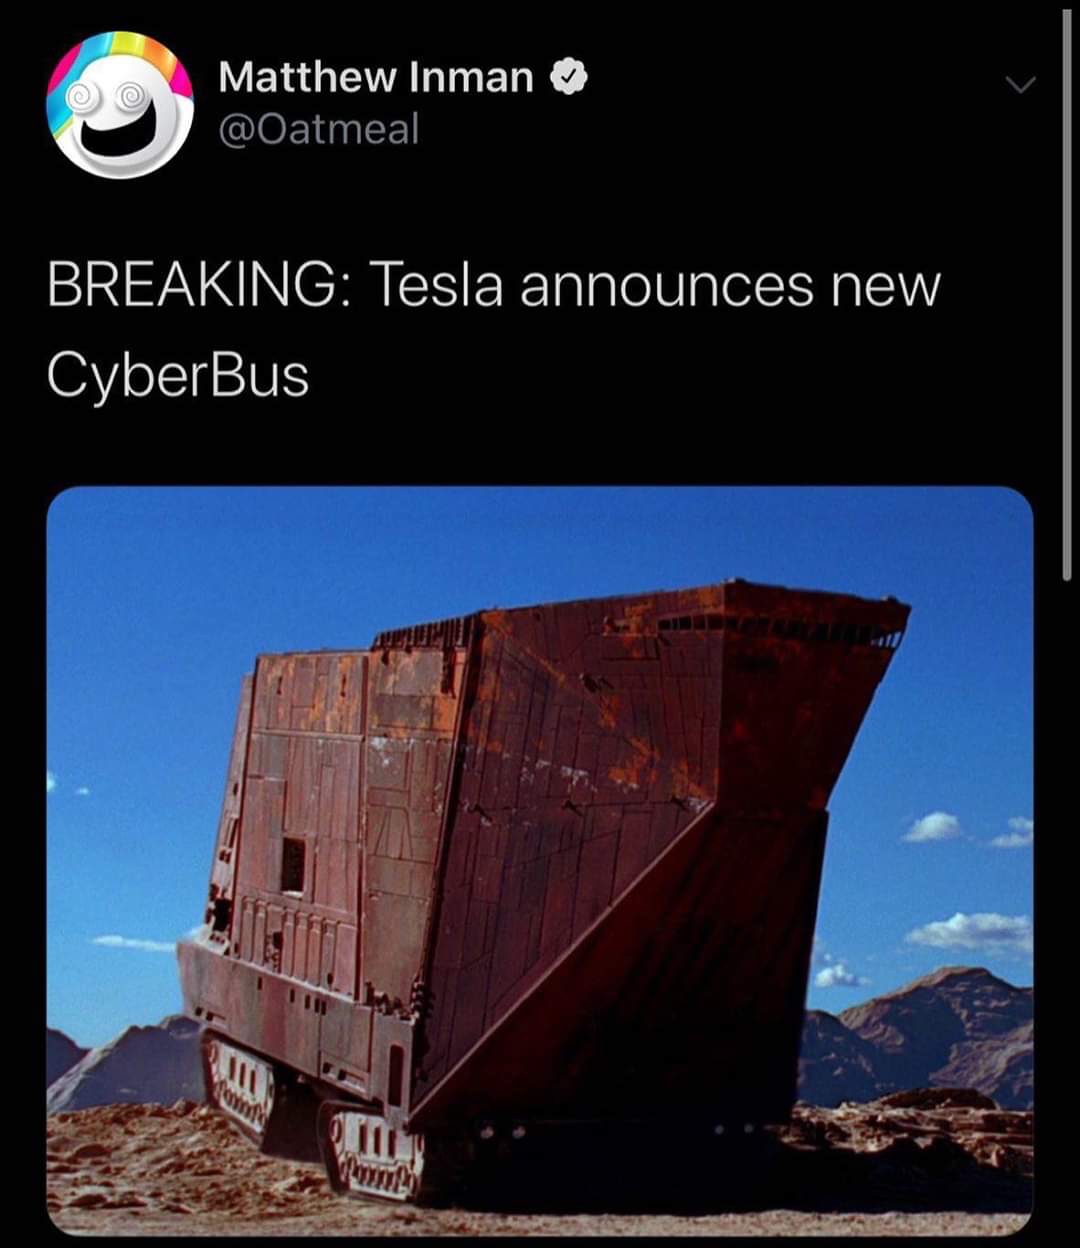 star wars tesla meme - Matthew Inman ~ Breaking Tesla announces new CyberBus